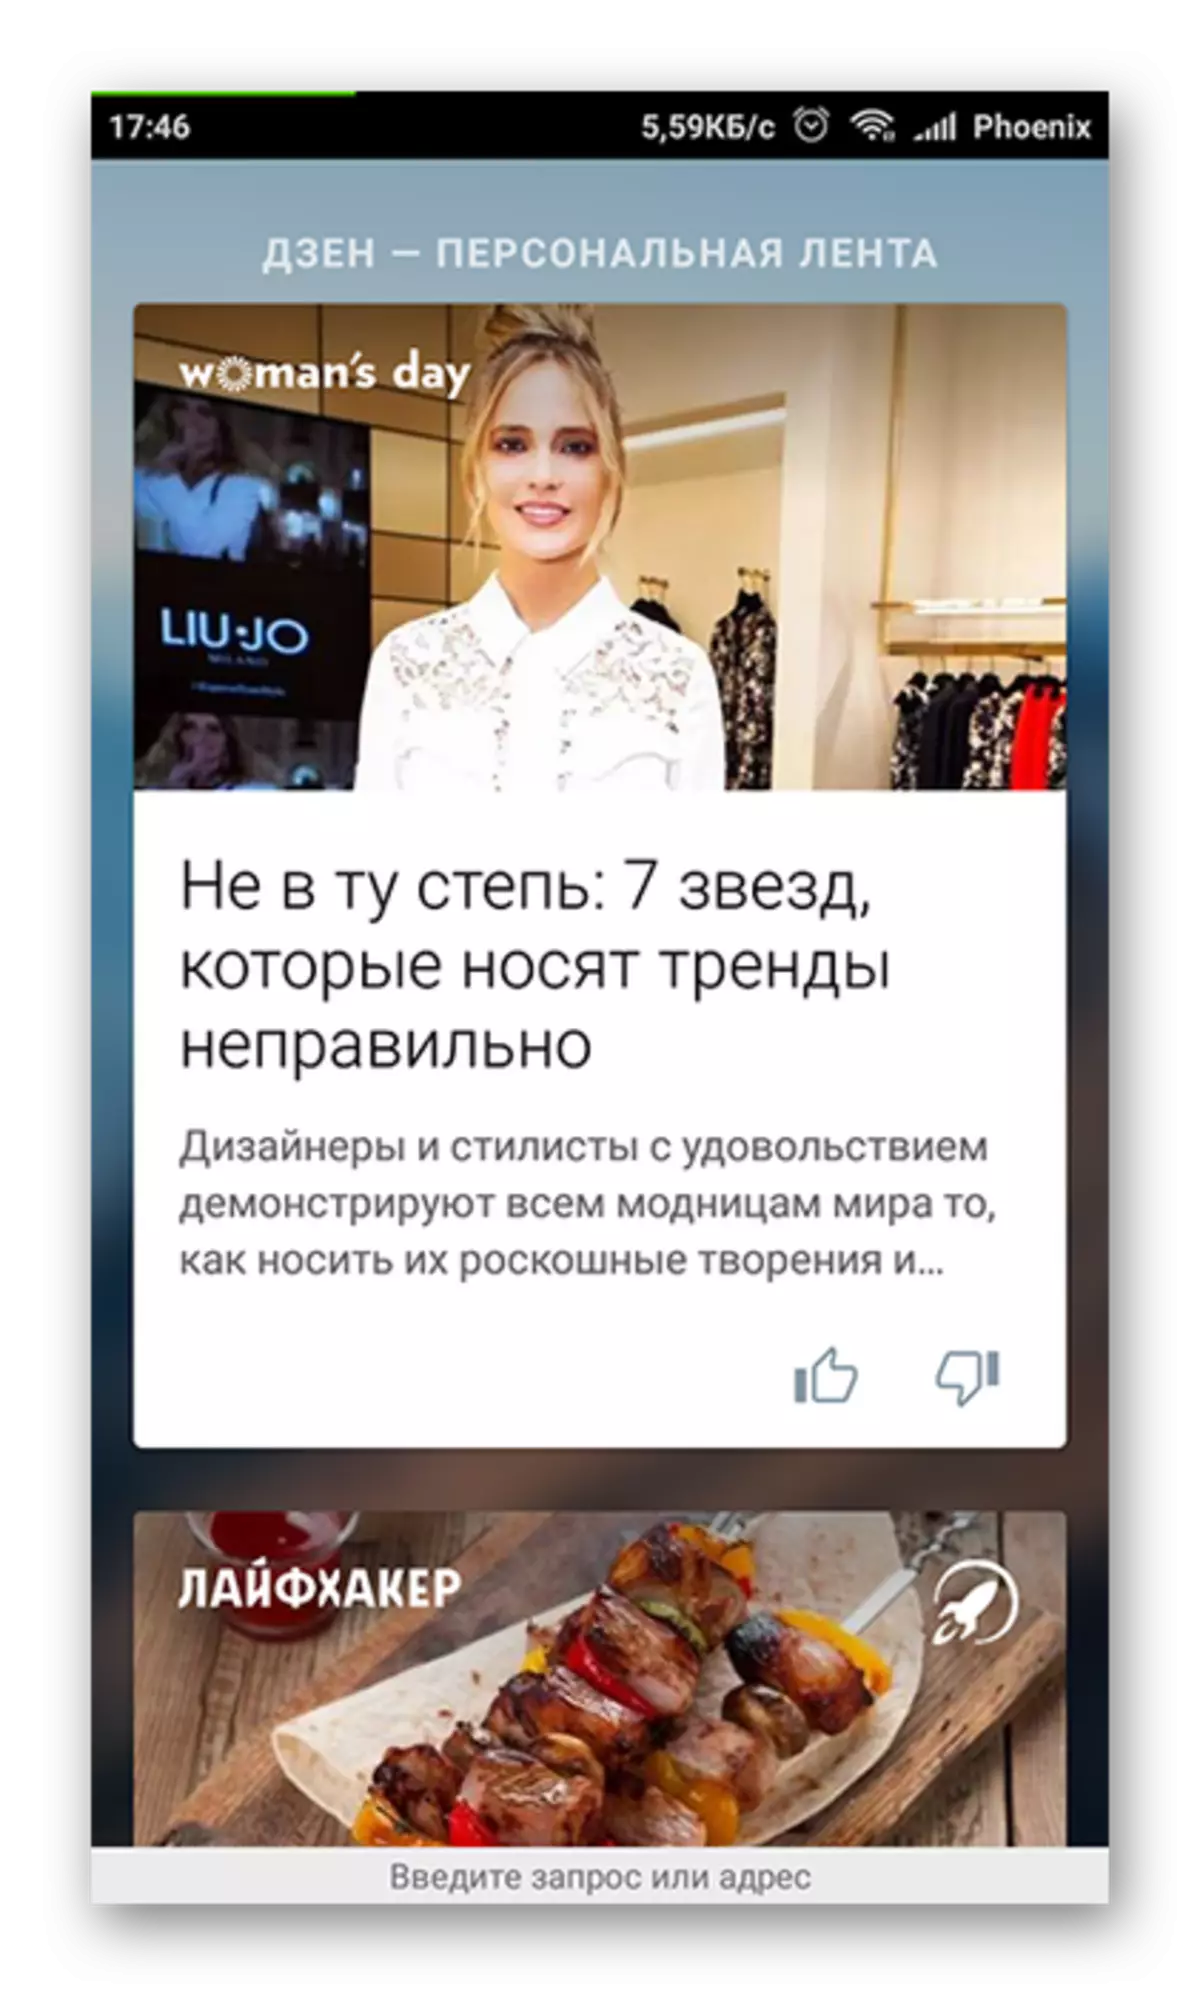 Yandex.dzen lori Android